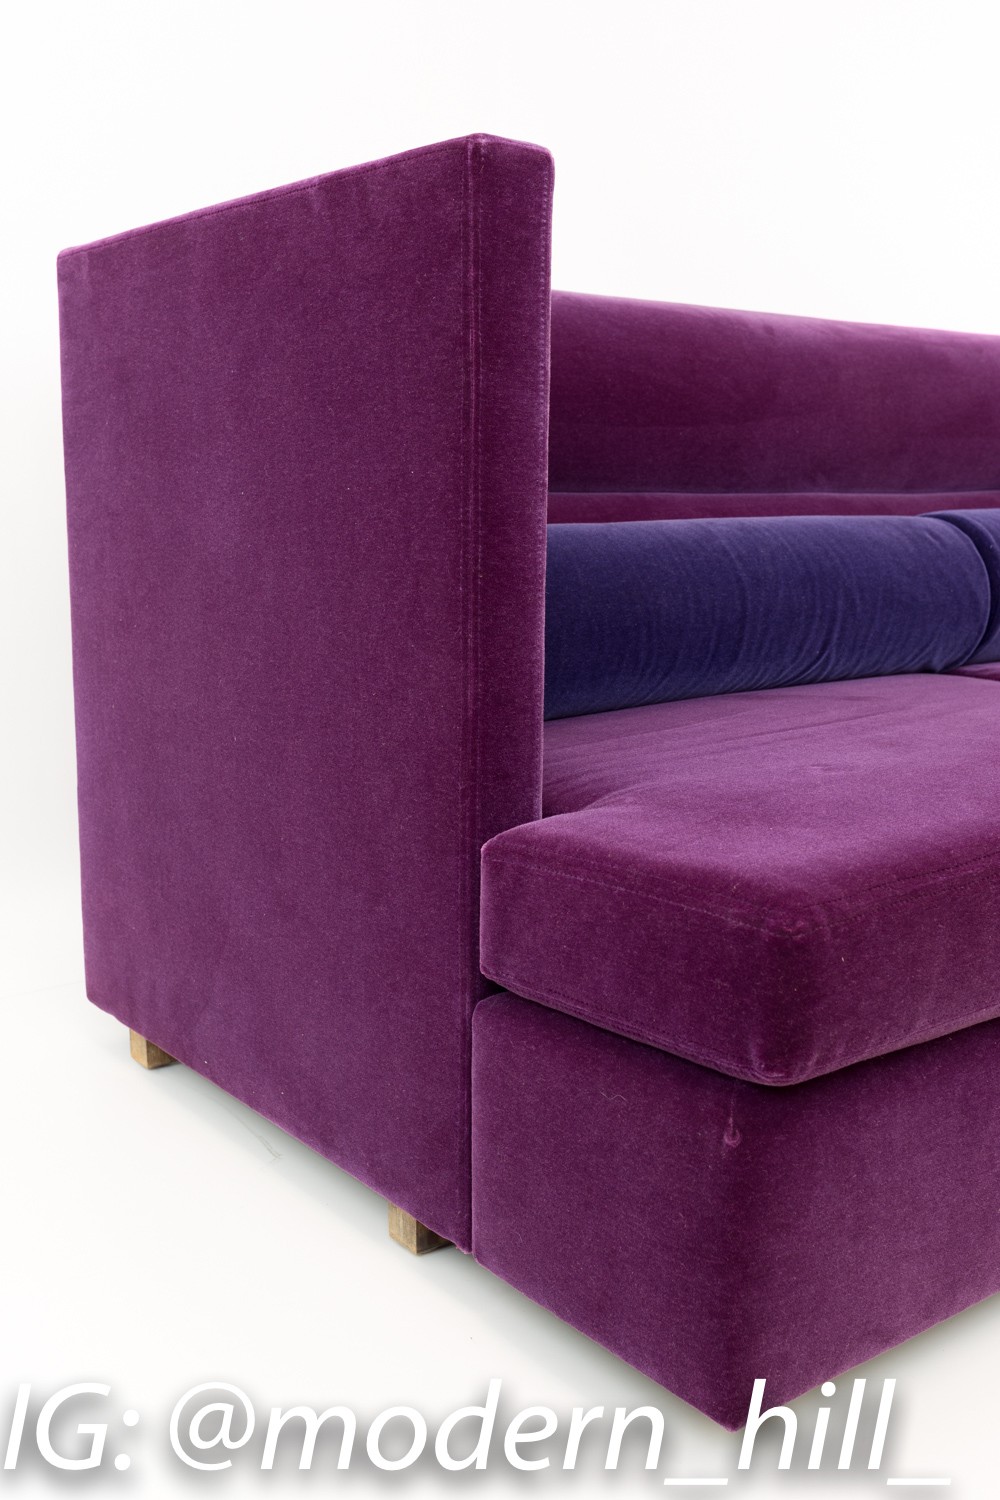 Milo Baughman Mid Century Modern Shelter Sofa in Purple Mohair Fabric